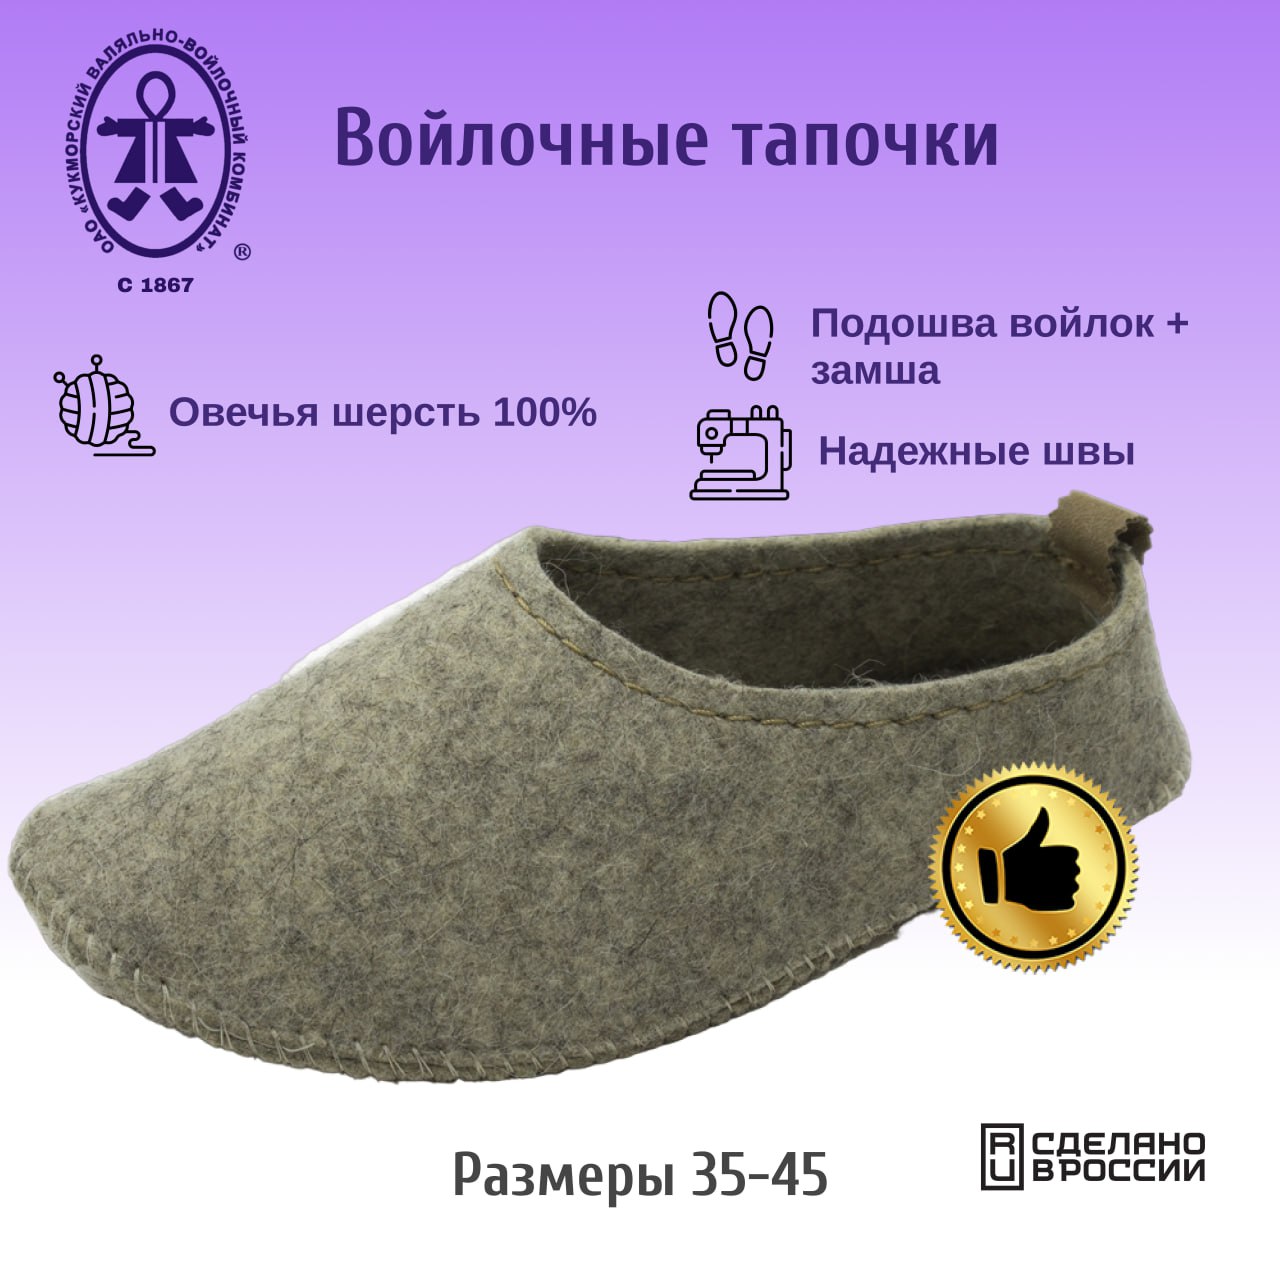 Тапочки Кукморские валенки Т-34-1022 серый, 36